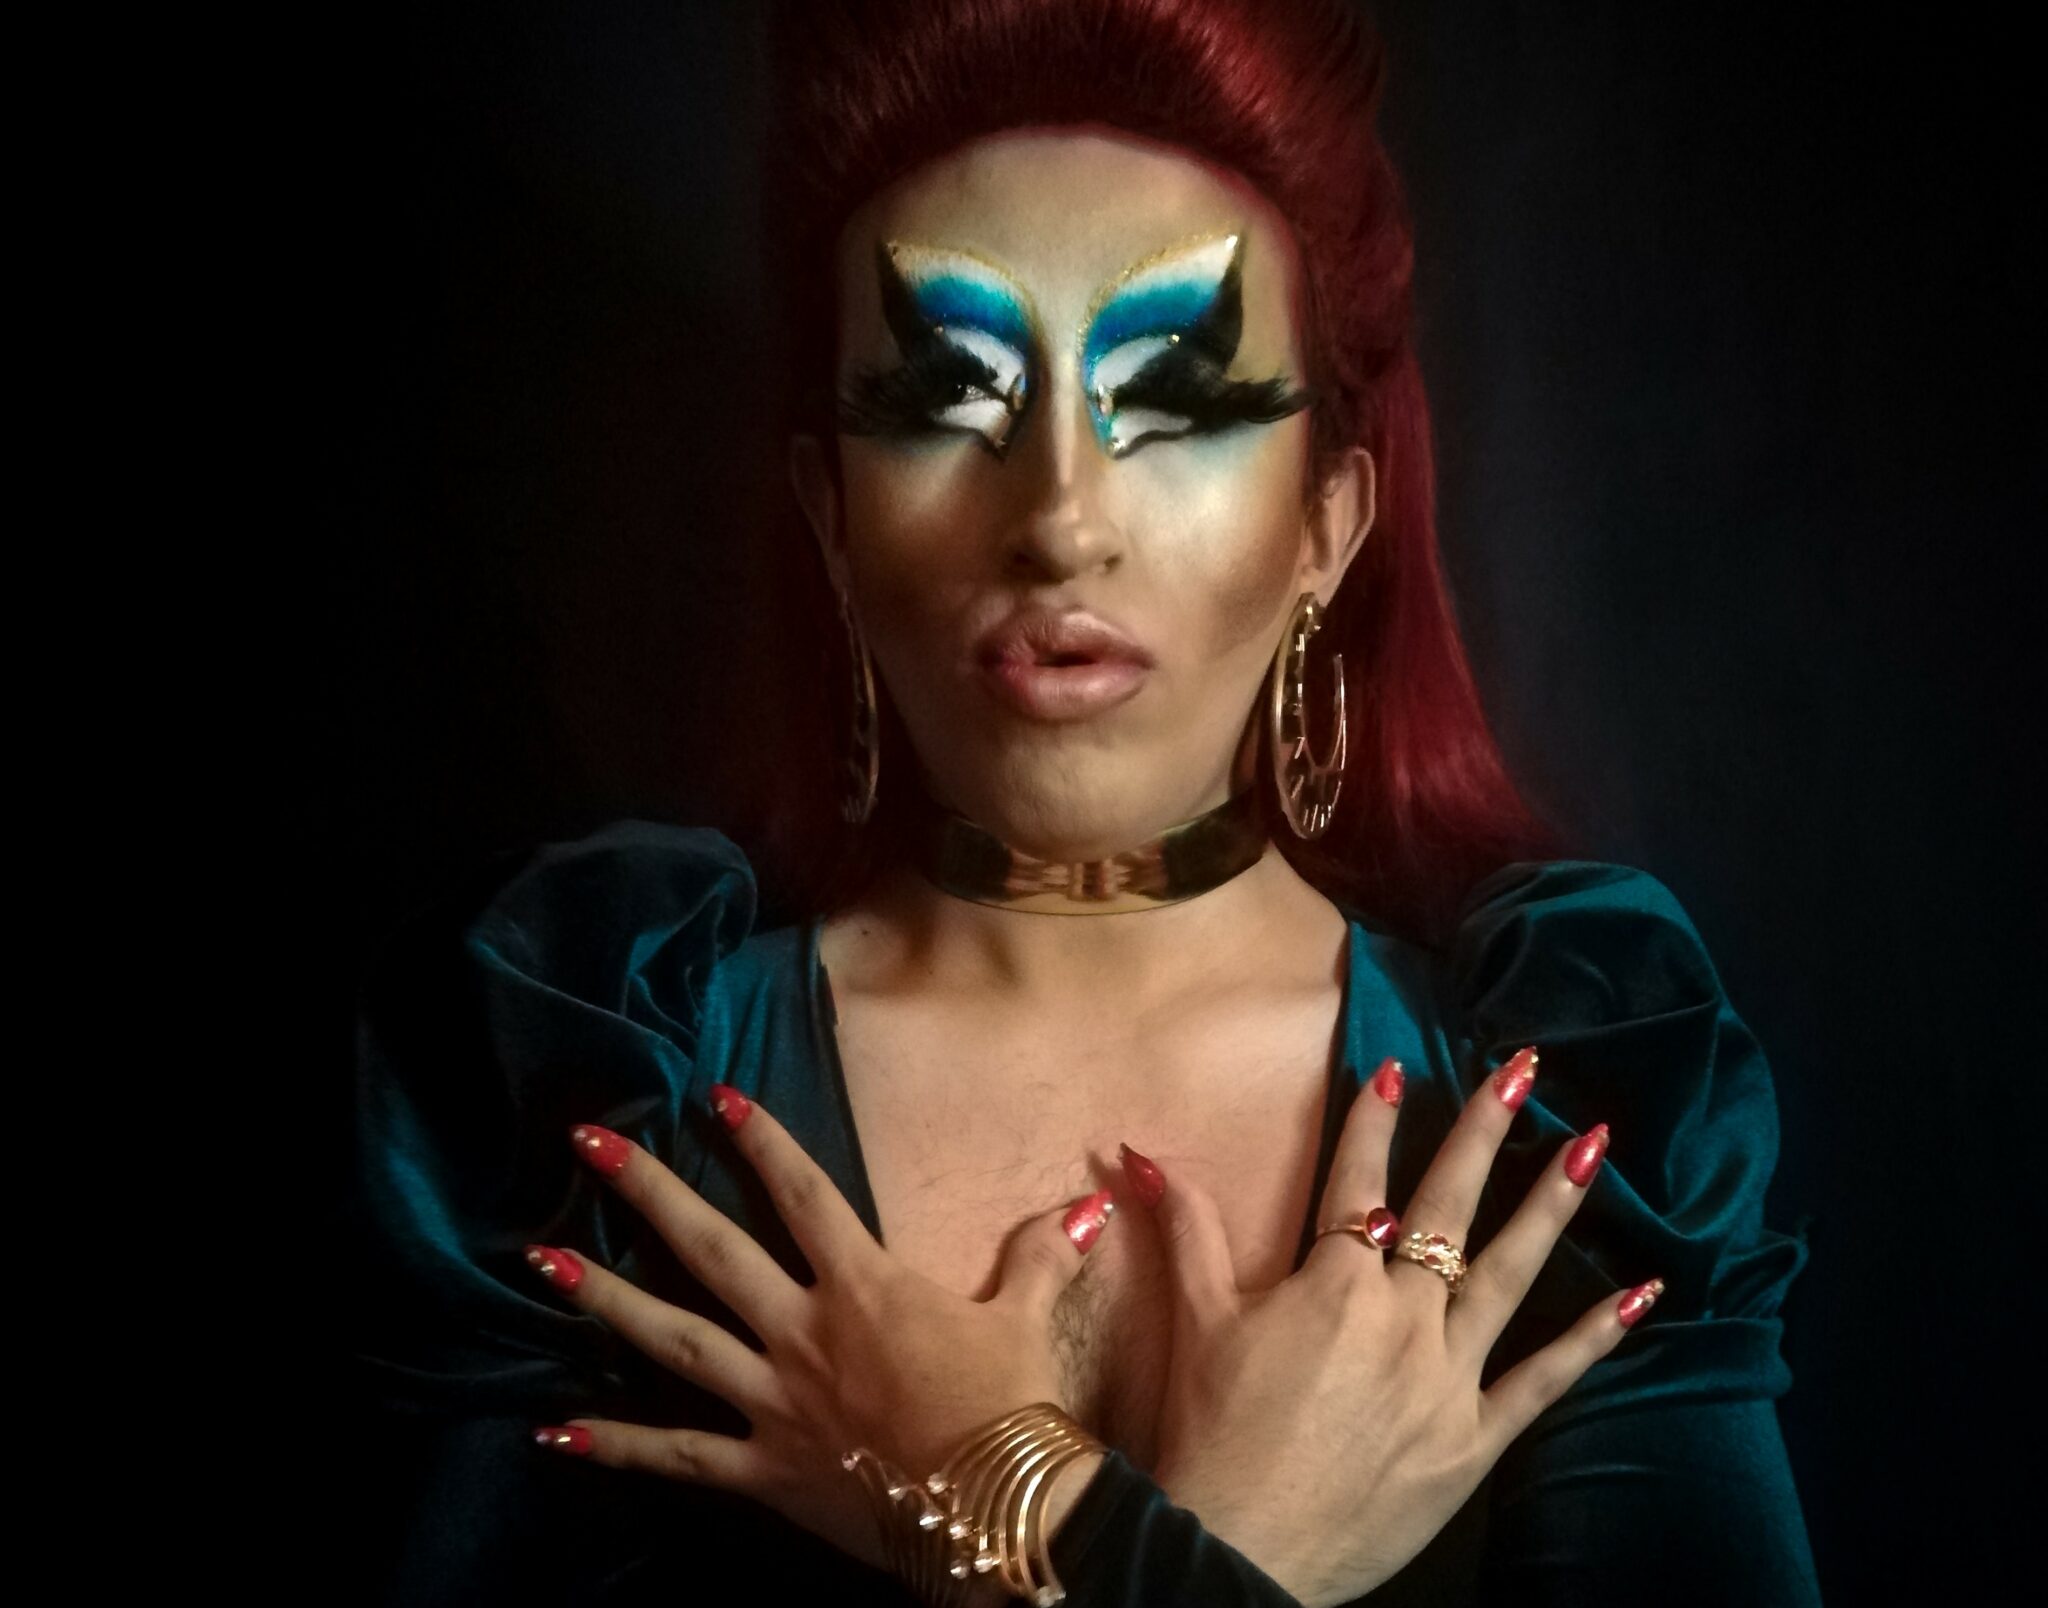 A drag queen wearing vibrant blue eye makeup.